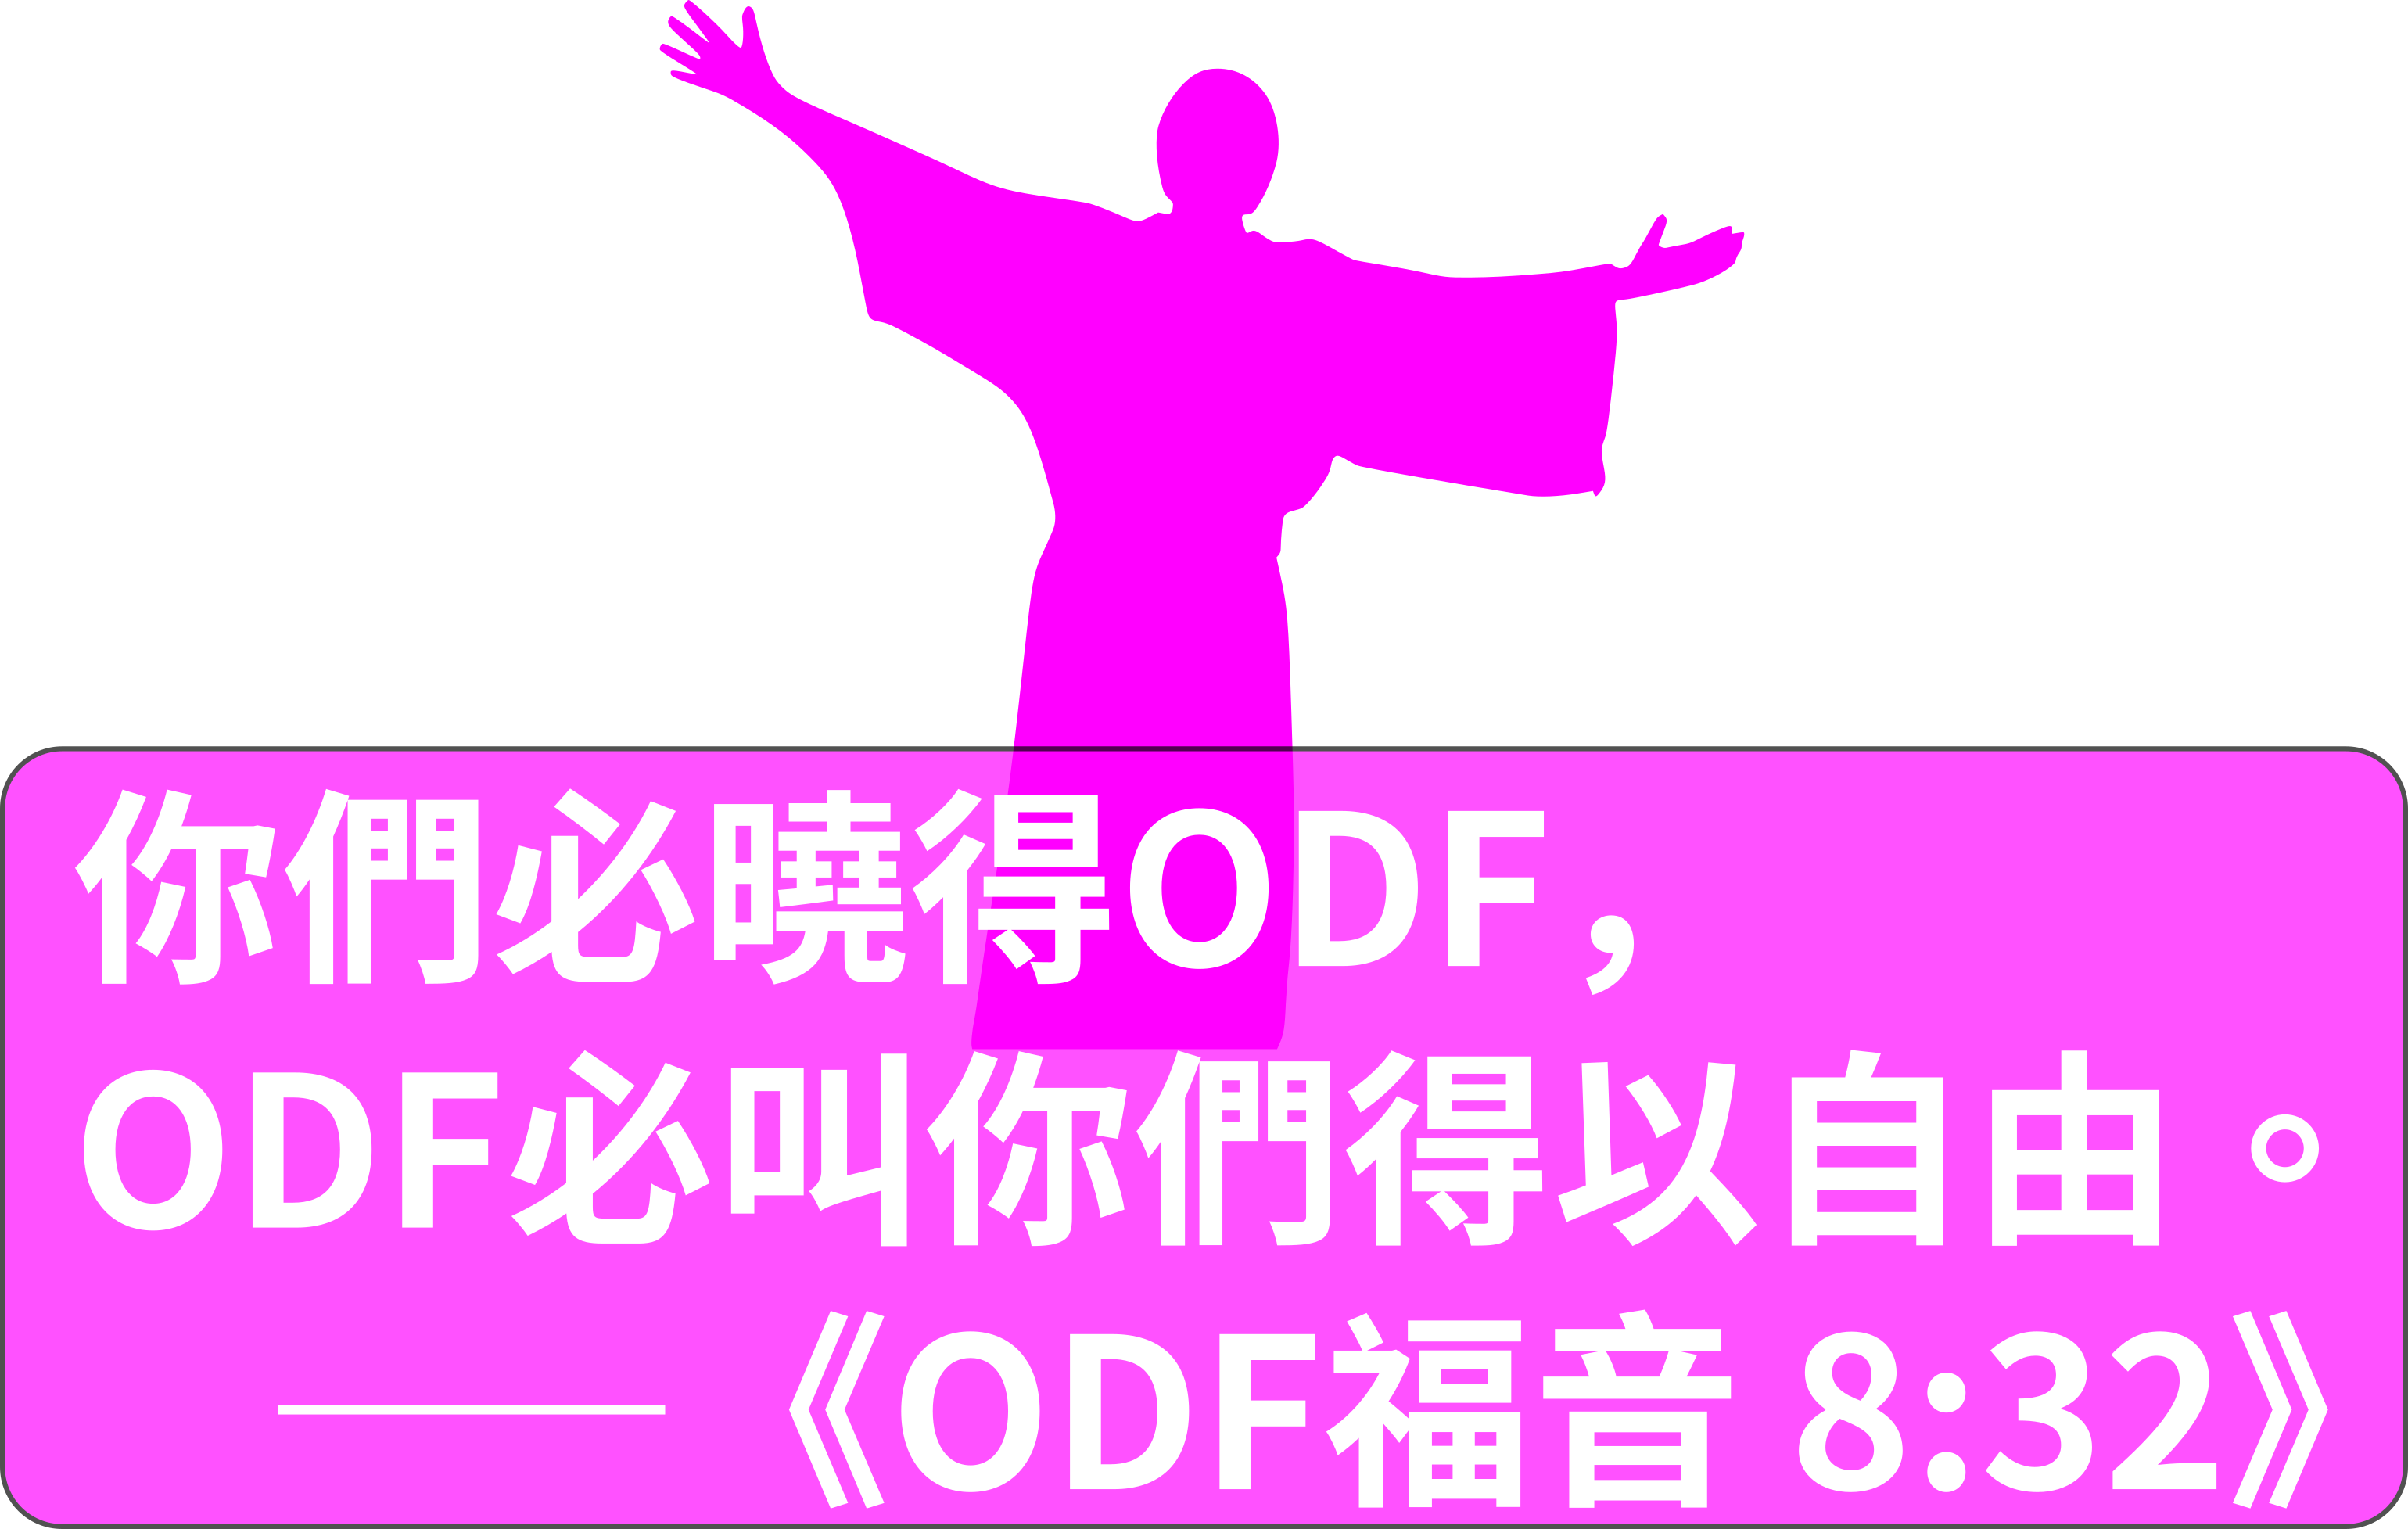 ODF 福音貼紙